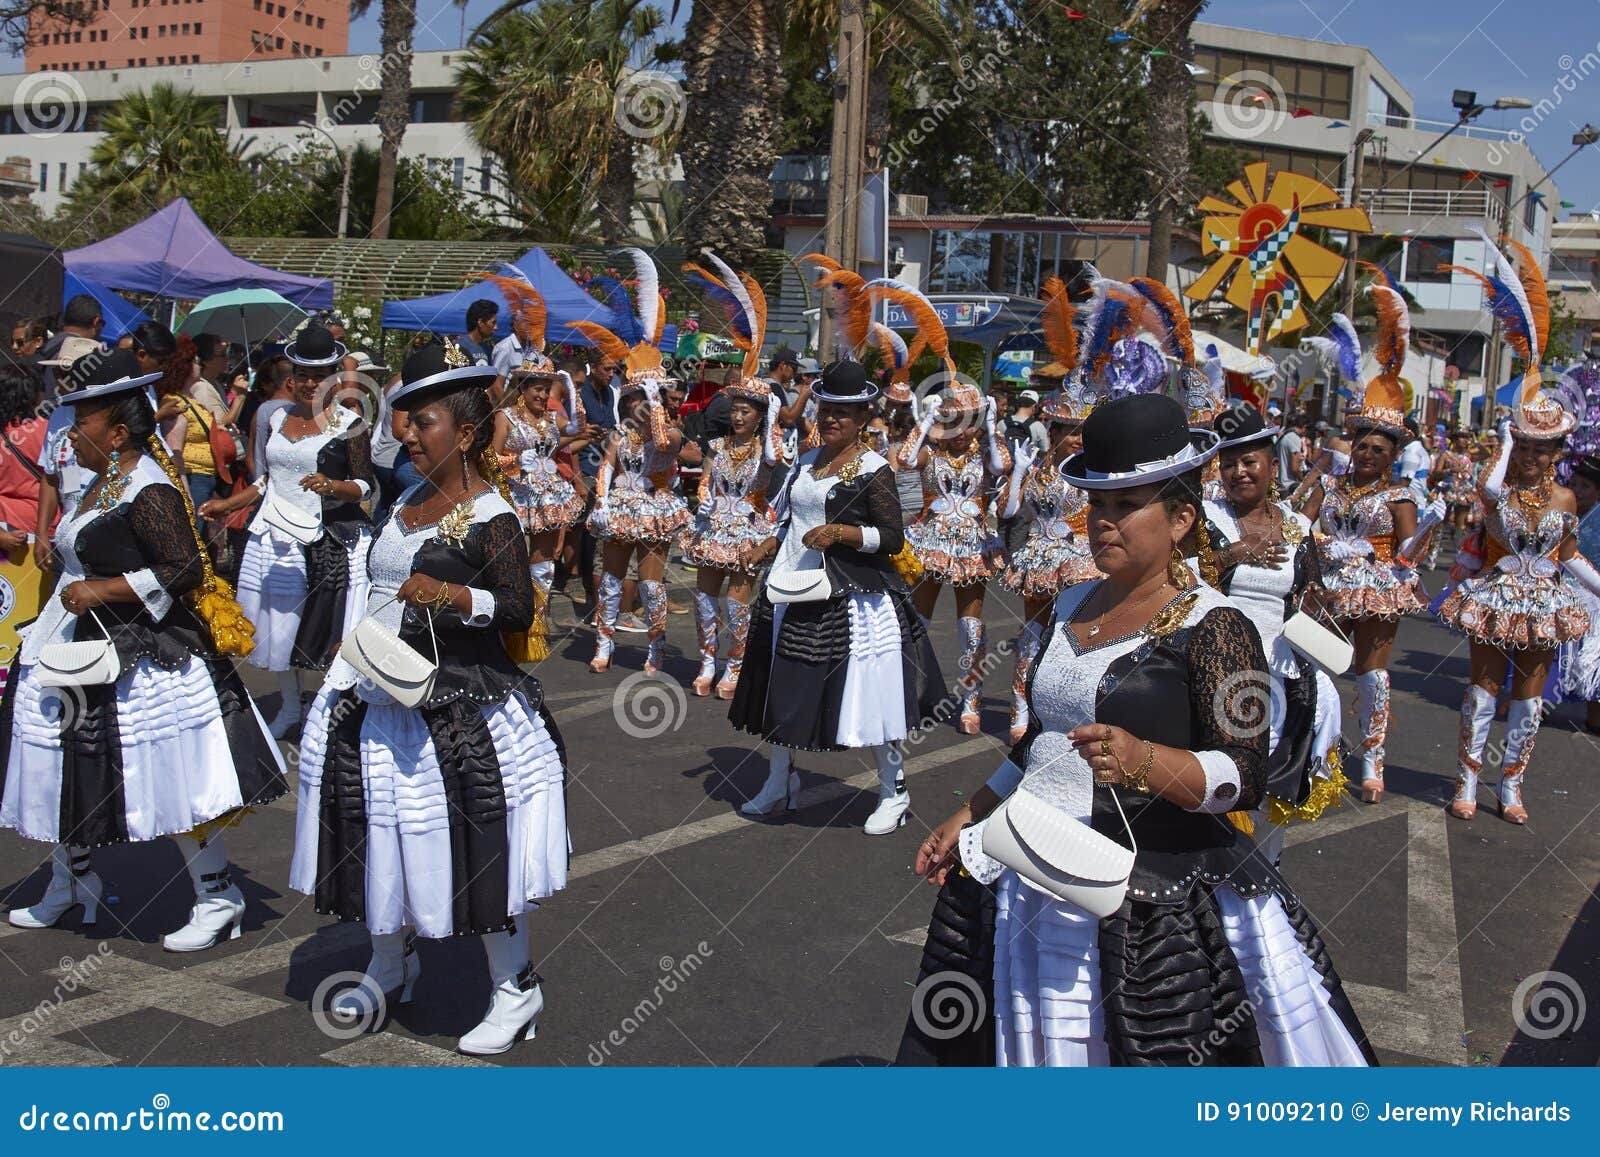 Morenada Dance Group at the Oruro Carnival in Bolivia Editorial Image ...